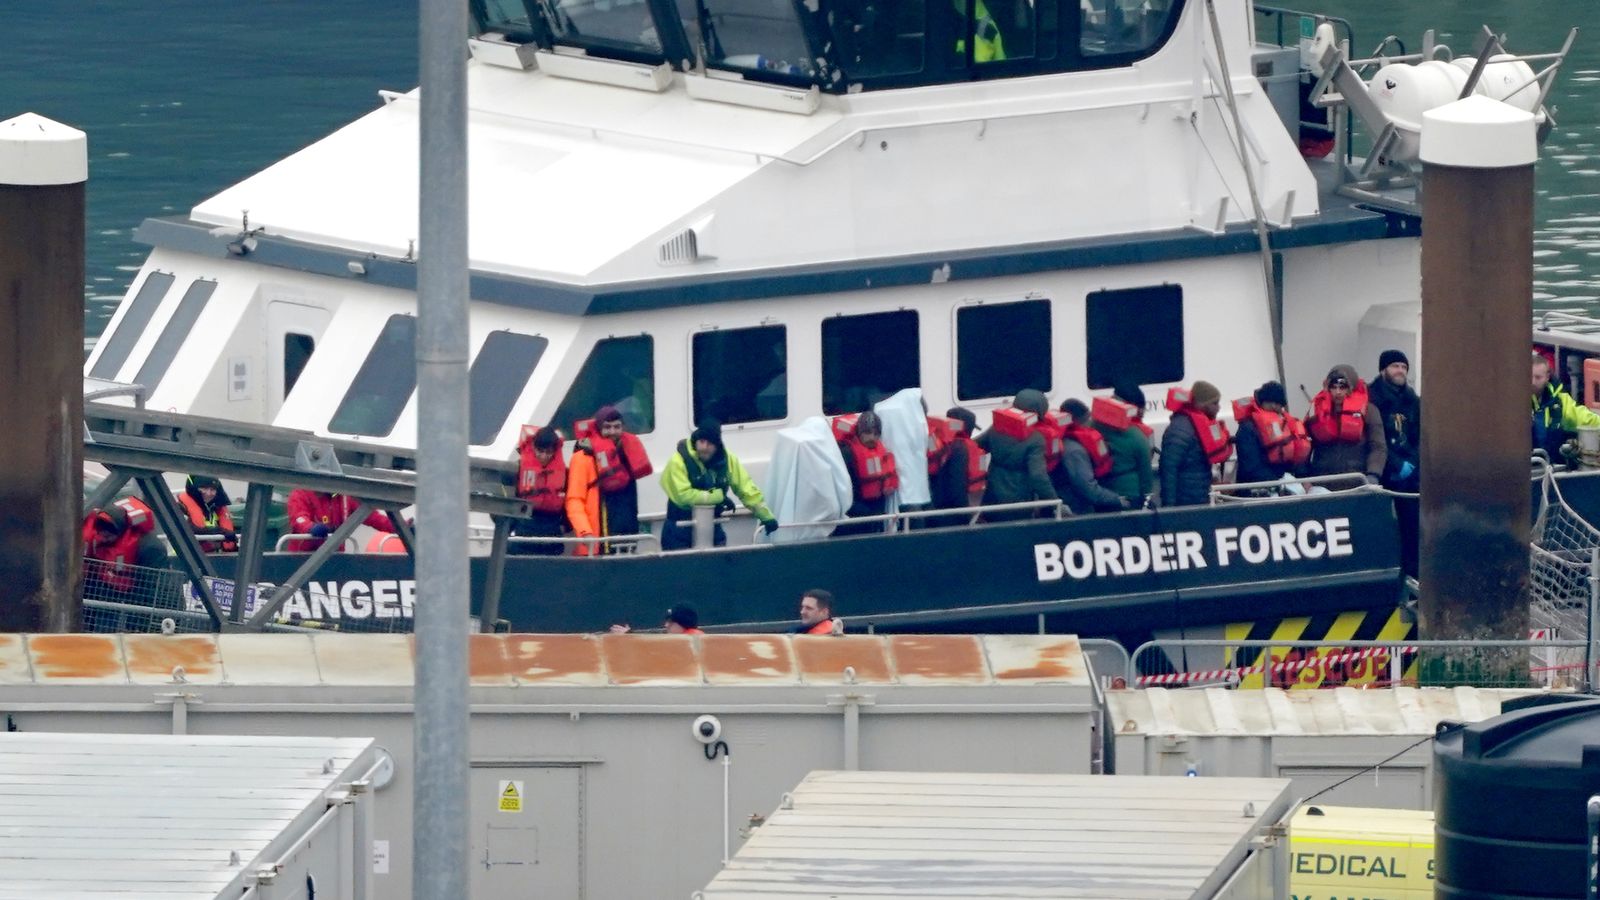 Around 500 migrants crossed Channel to UK today - Espotting.com